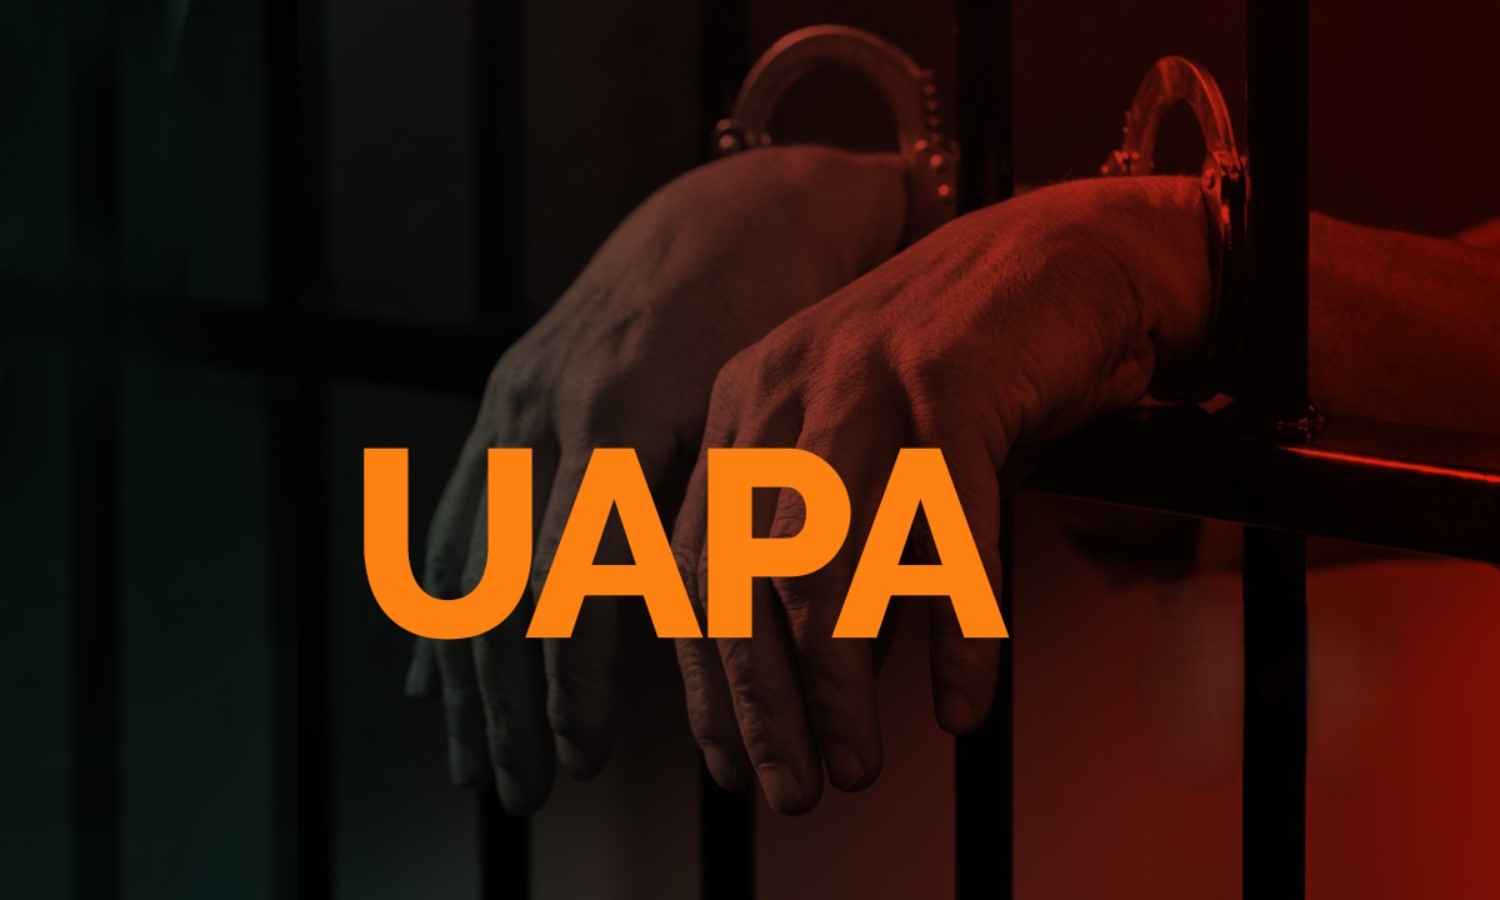 Triggering UAPA: Tribunal Stresses Caution on Plebiscite Advocacy in J&K